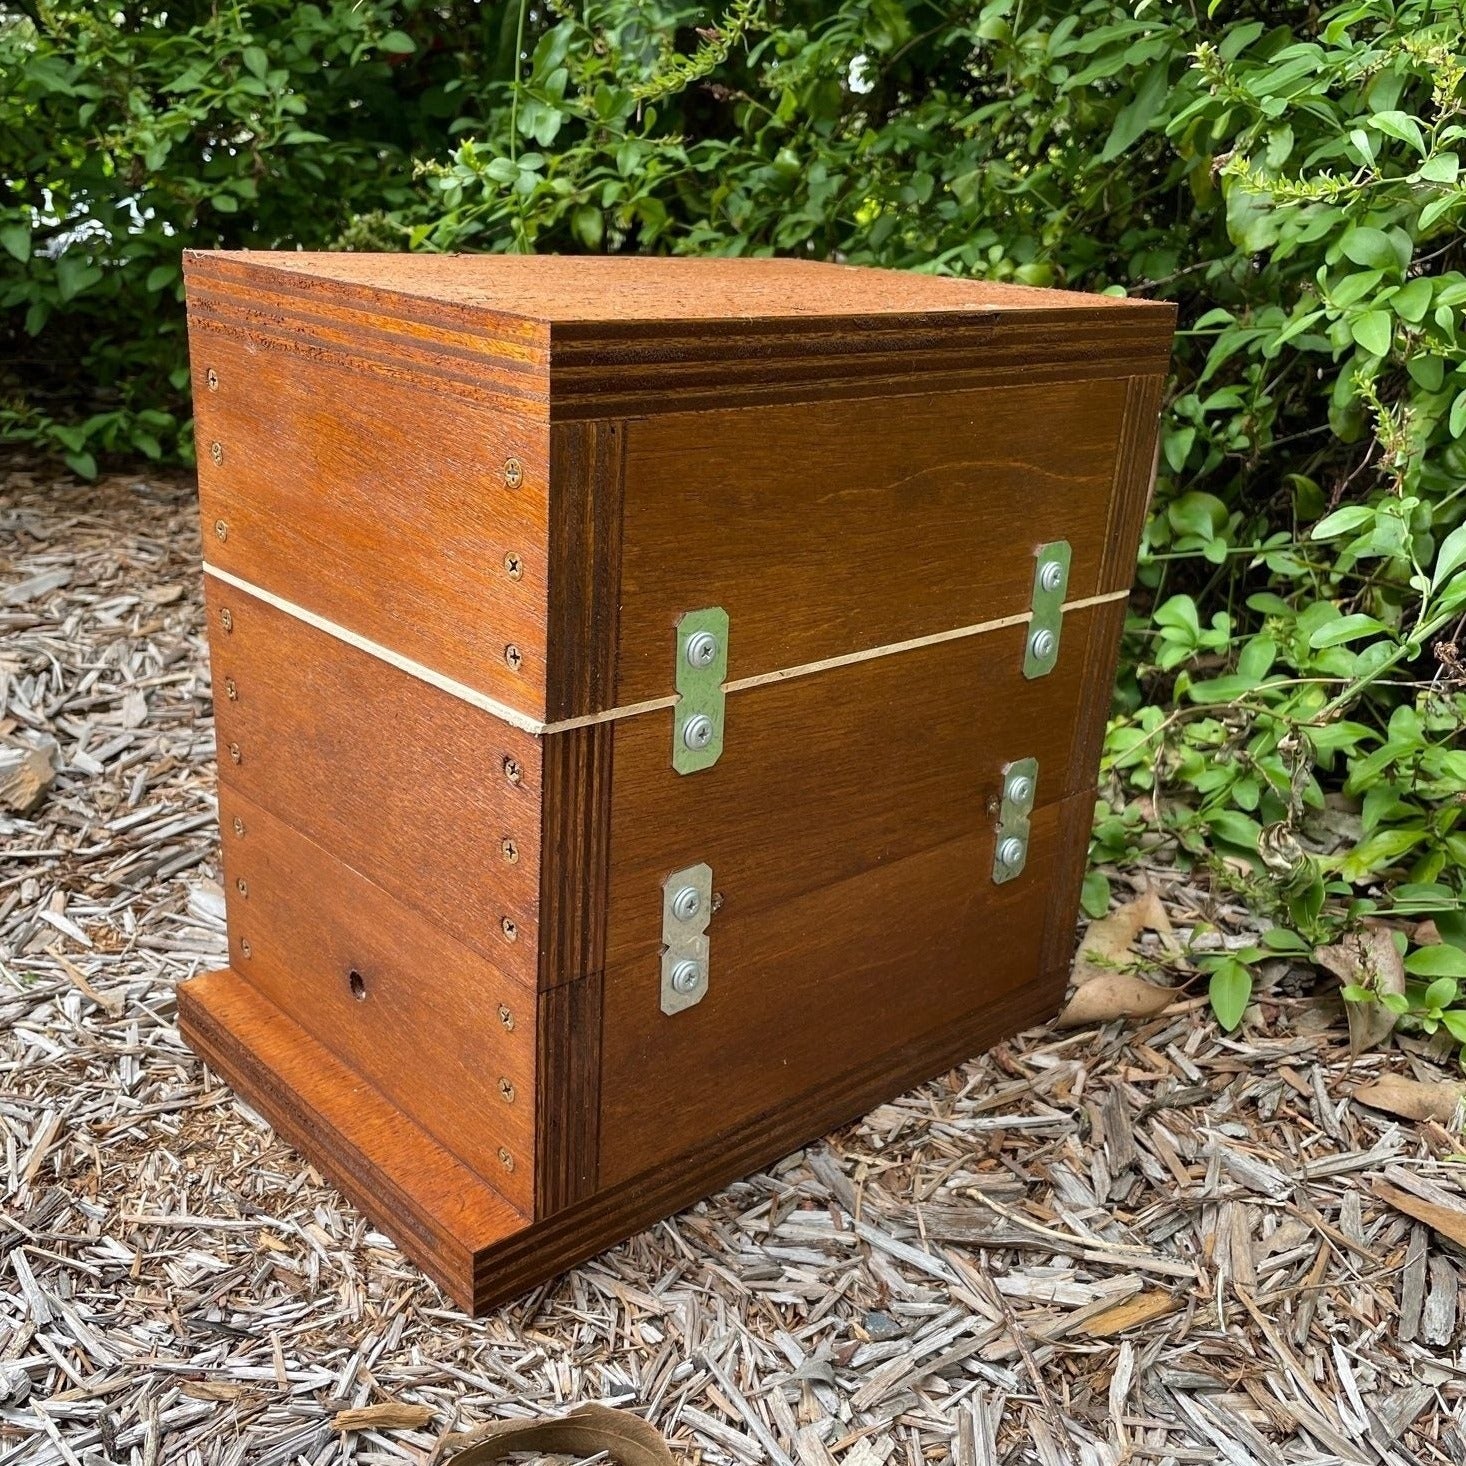 Honey Super Beehive OATH Box Stingless Australian Native Bee Hive - Banish